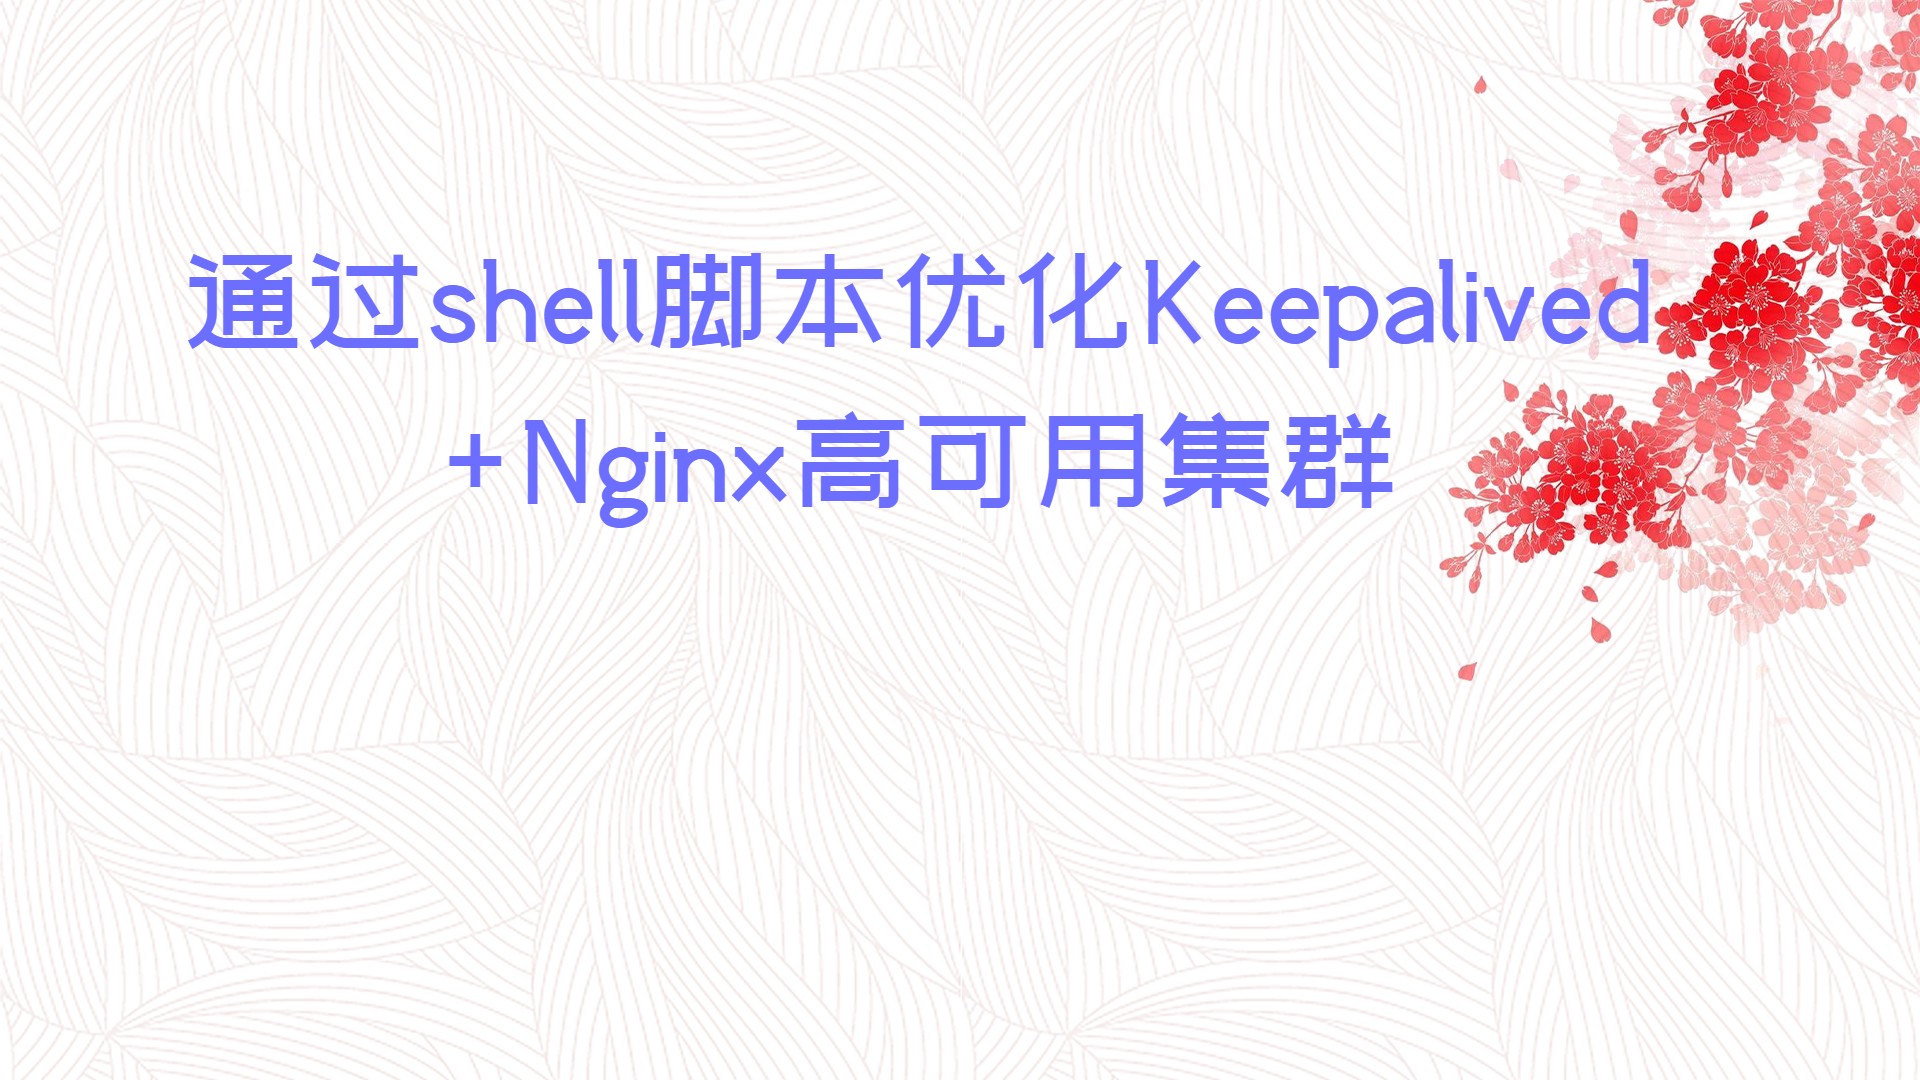 通过shell脚本优化Keepalived+Nginx高可用集群